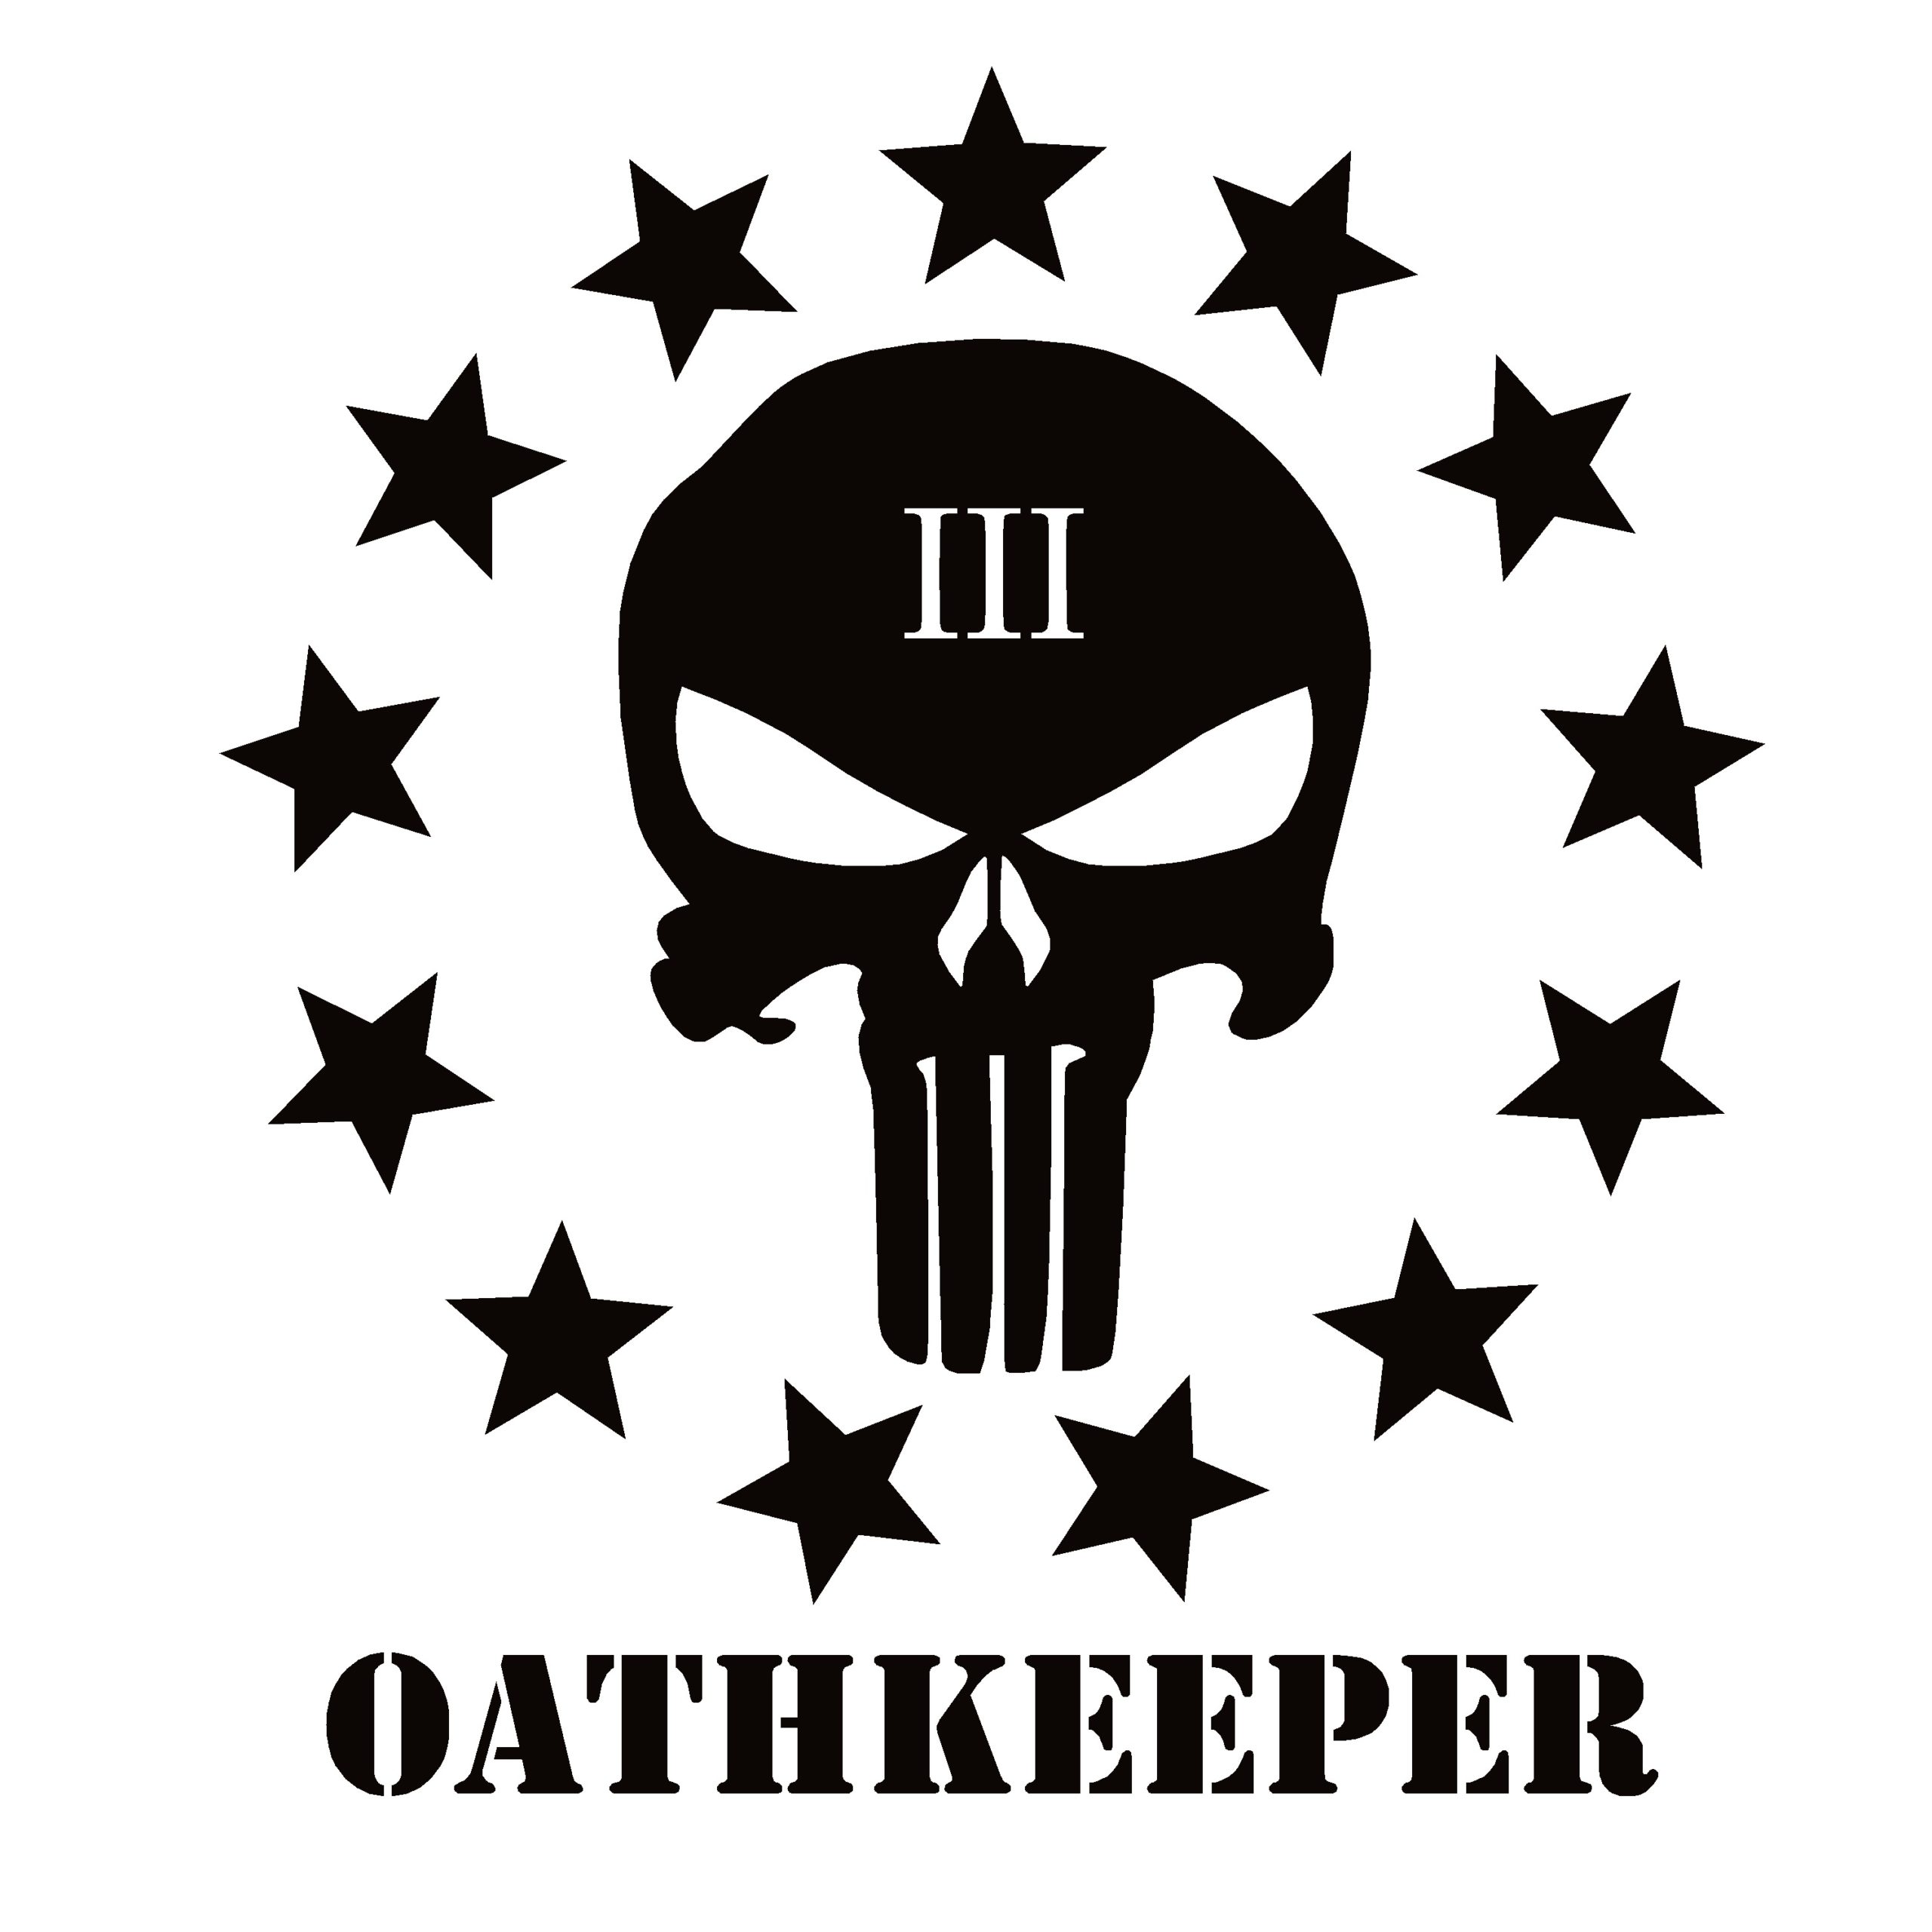 3% Oath Keeper Sticker - Three Percenter Oath Keeper Window Decal